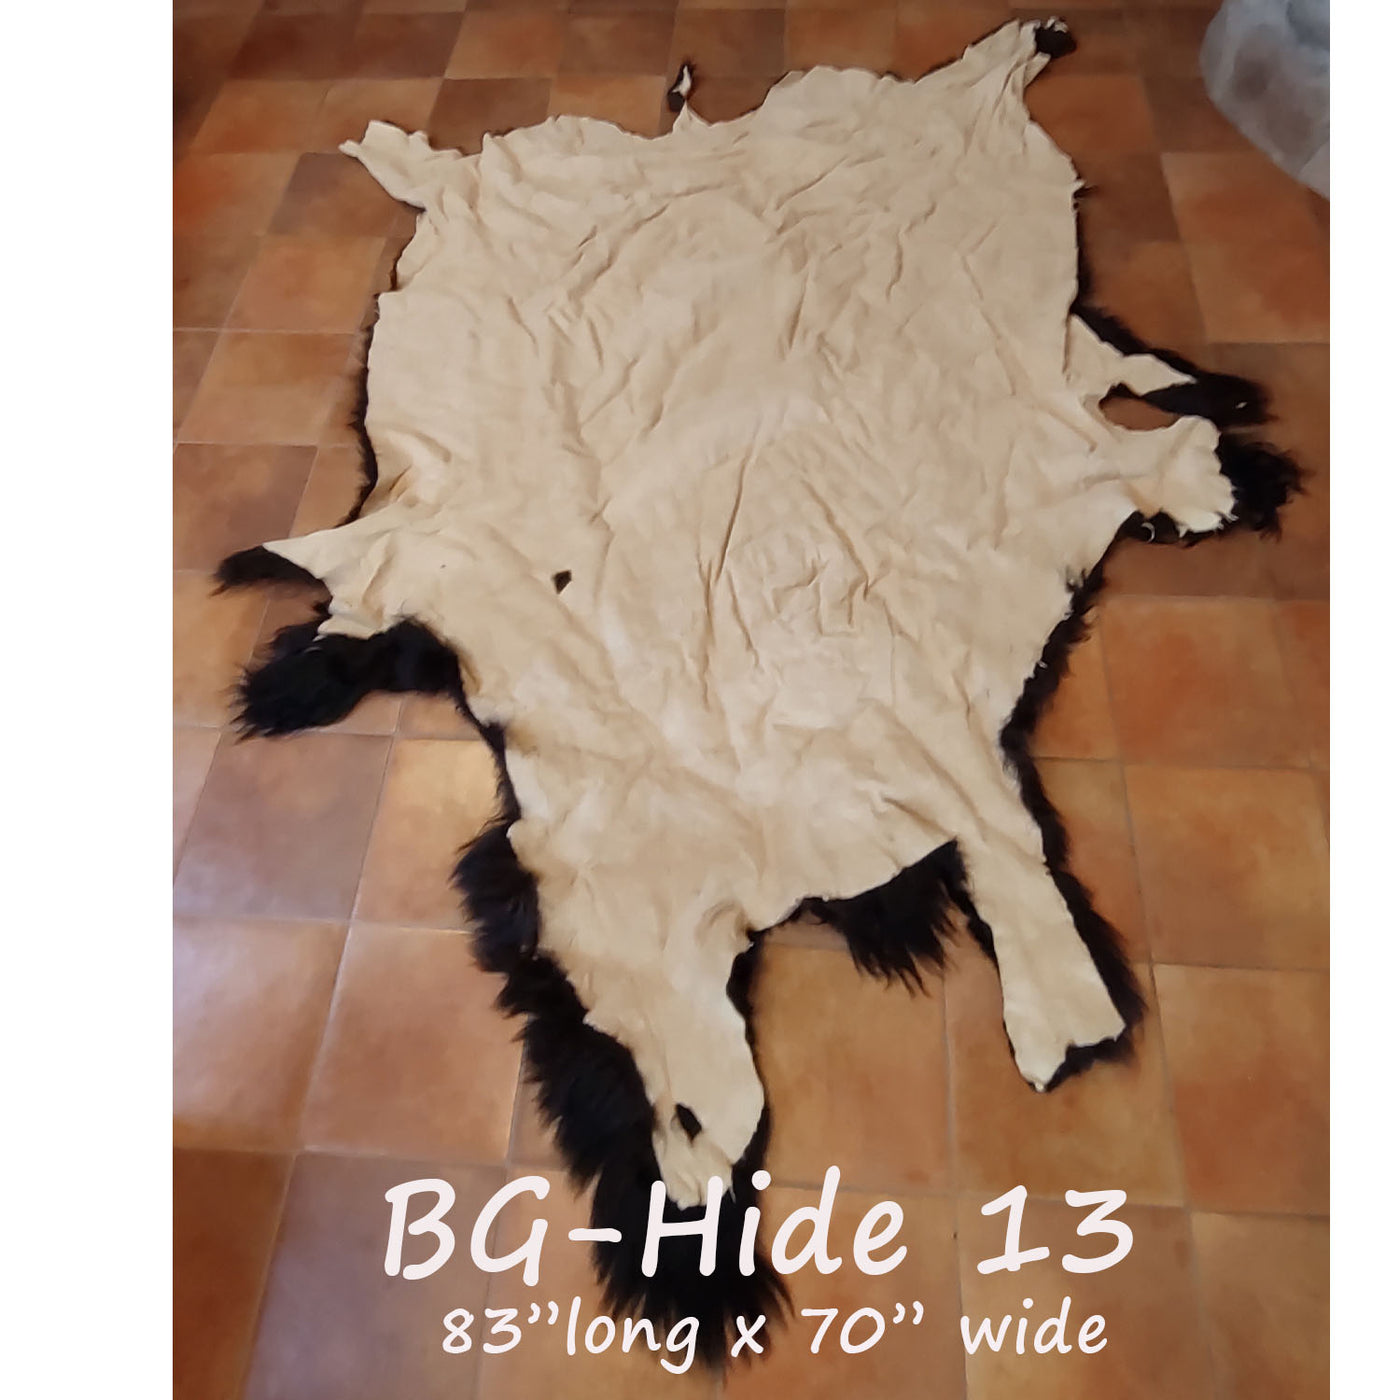 Bison (Buffalo) Hide / Robes